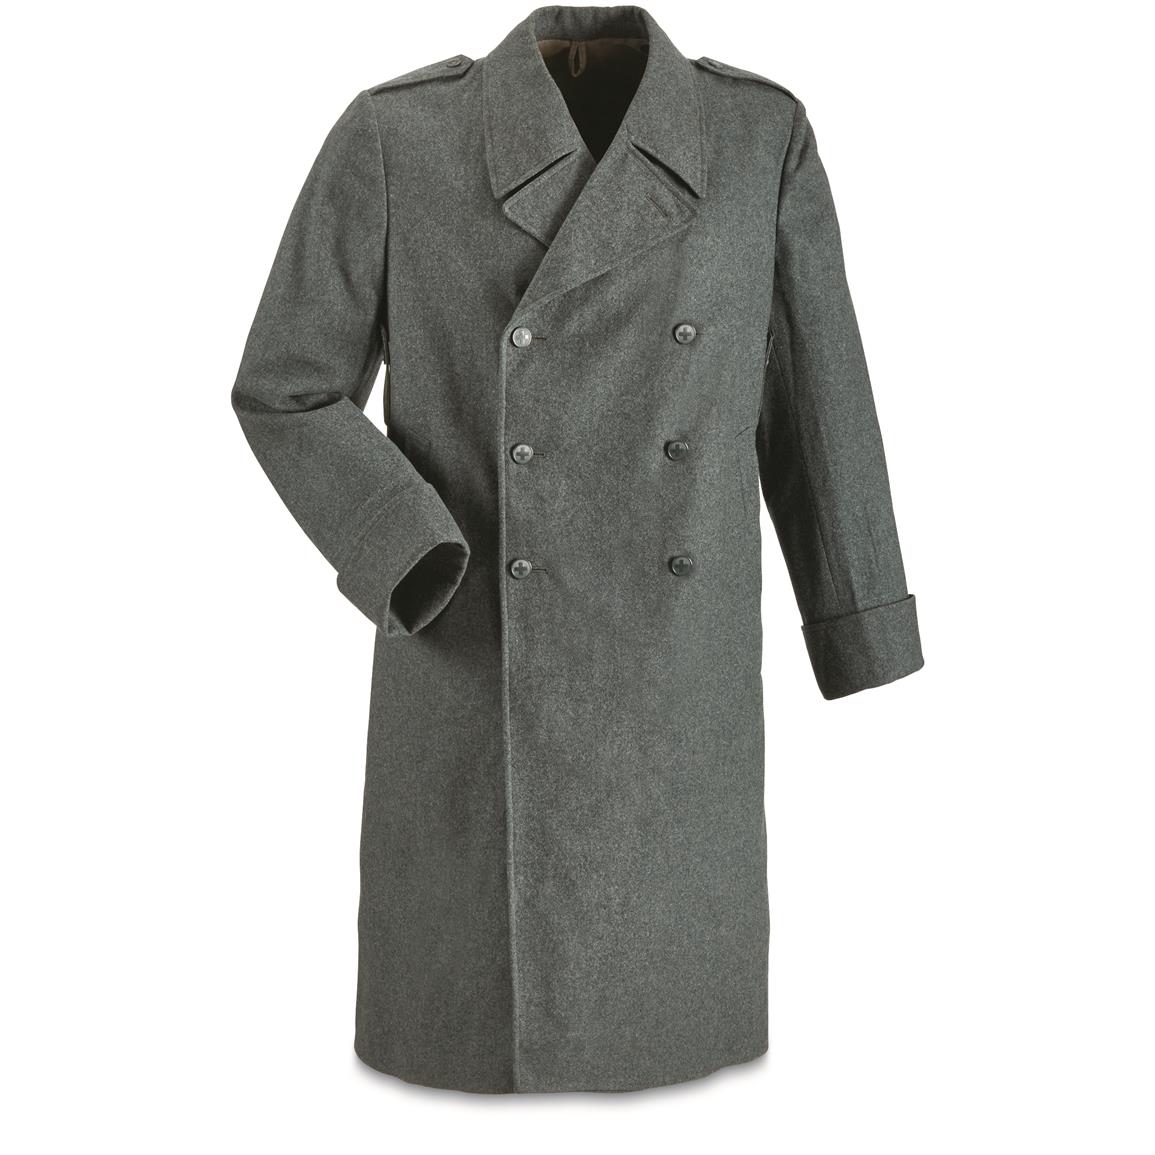 Swiss Military Surplus Wool Overcoat, Like New - 674430, Military ...